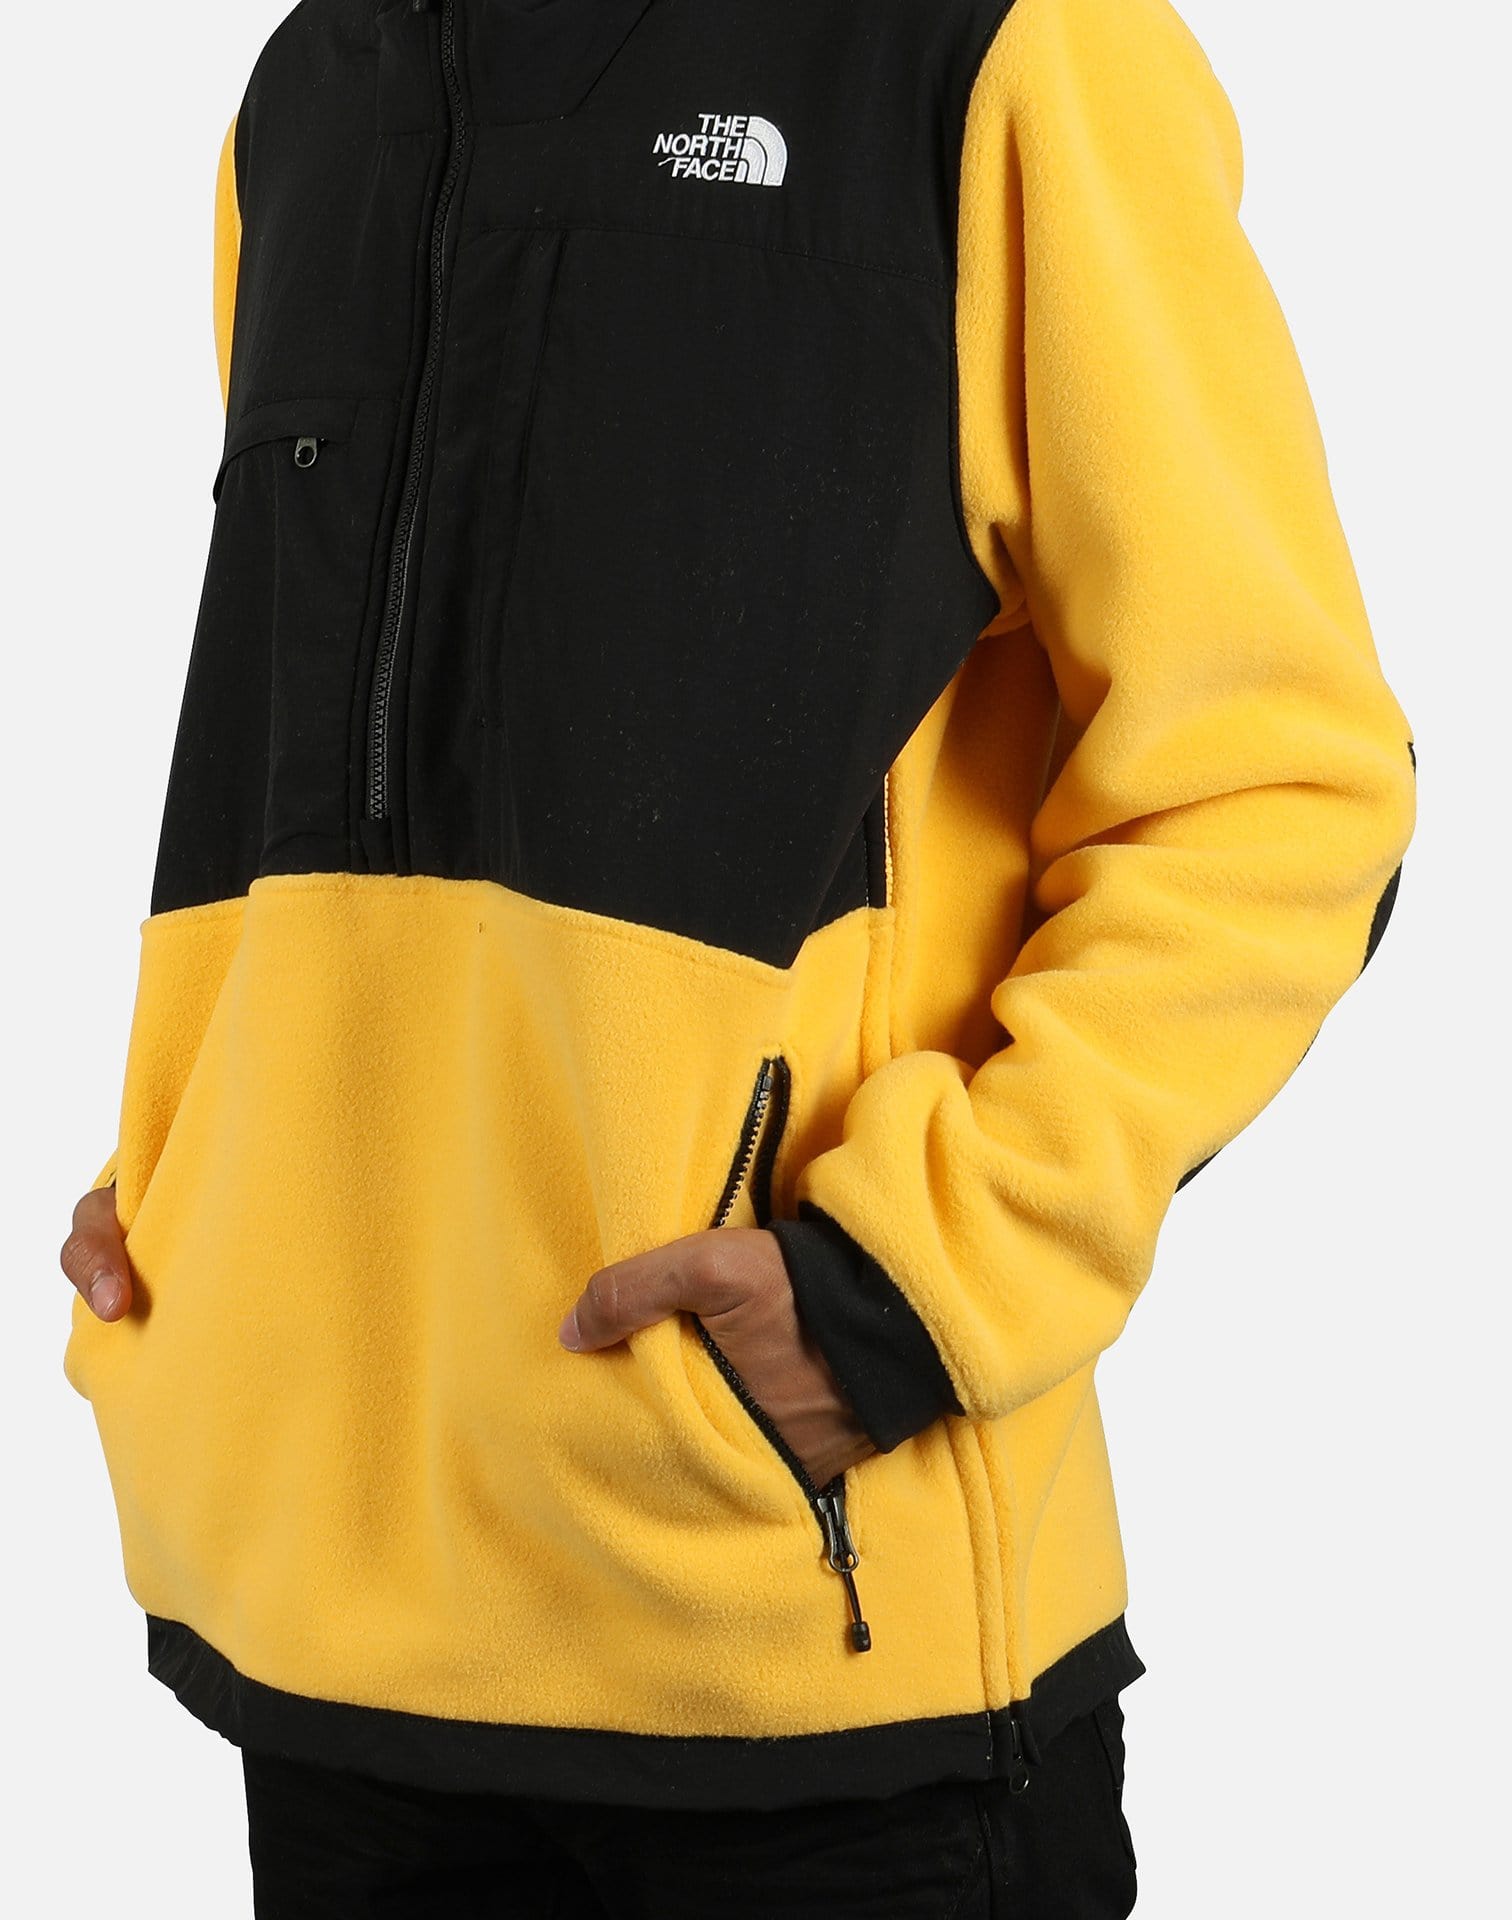 The North Face Men's Denali Anorak Jacket